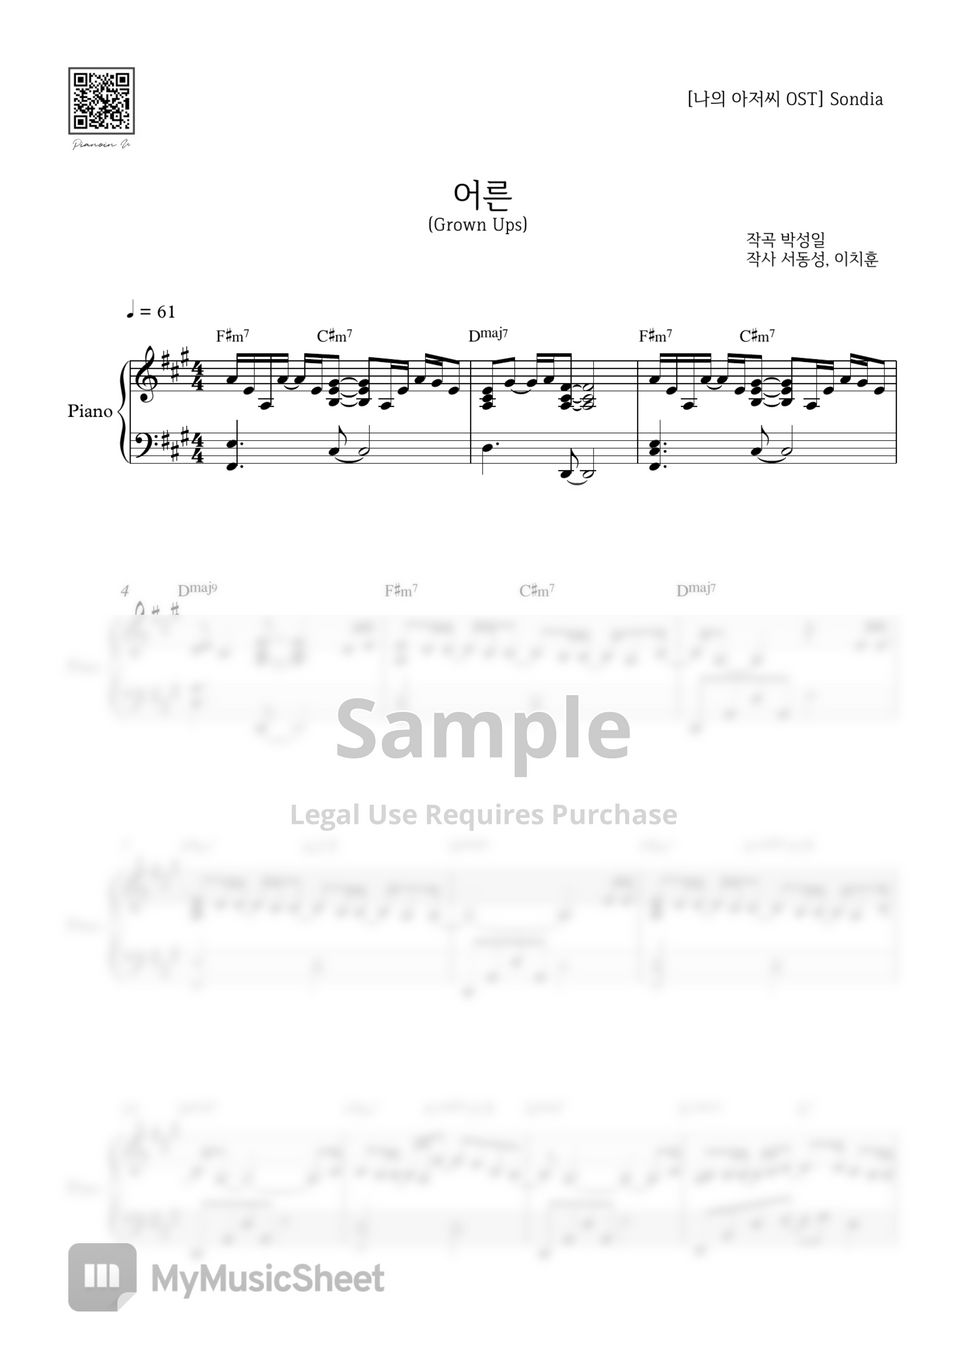 Sondia - 어른 (Grown Ups) [나의 아저씨 OST] by PIANOiNU